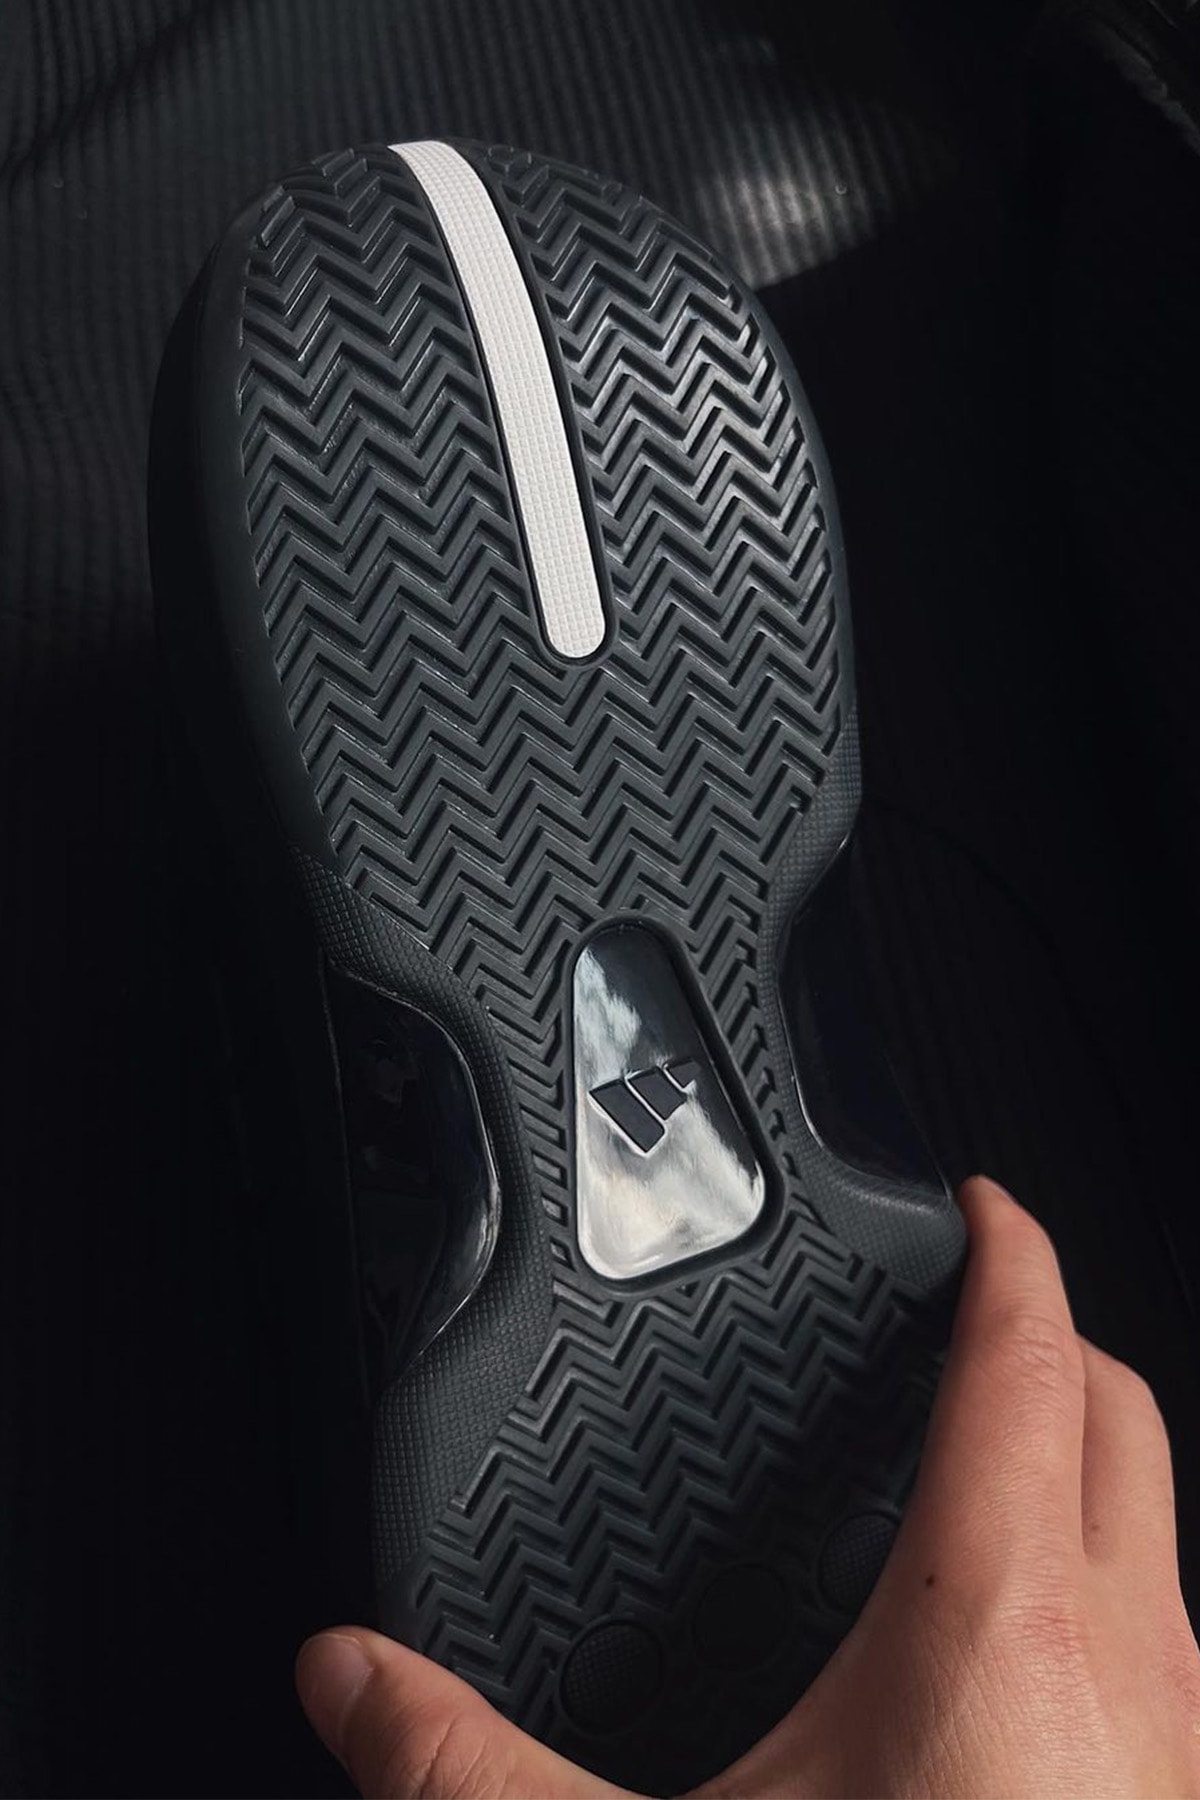 adidas 人氣籃球鞋款 Crazy IIInfinity 最新全黑配色率先亮相